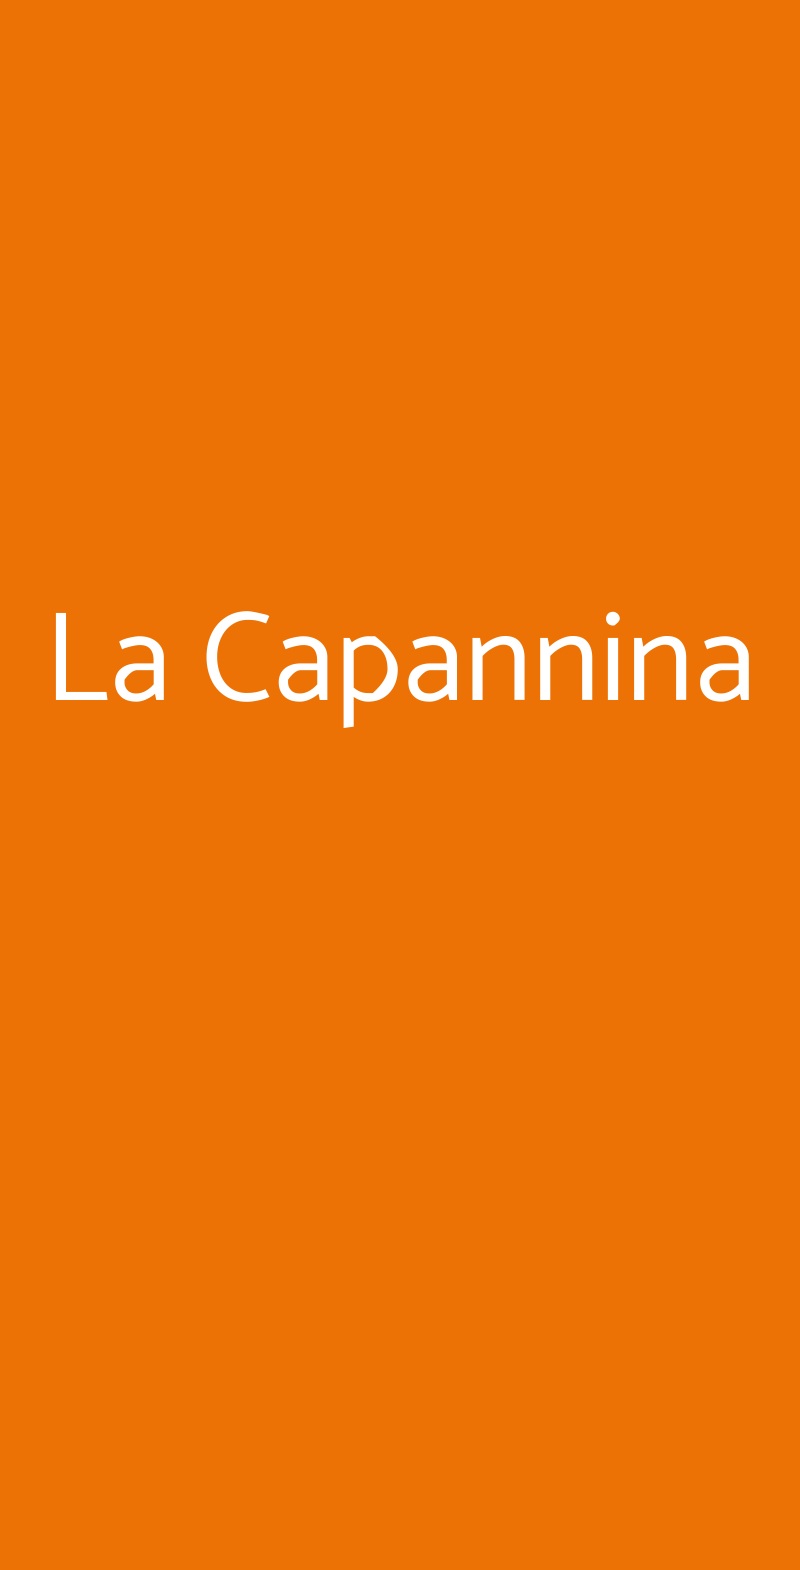 La Capannina Ostia (Roma) menù 1 pagina